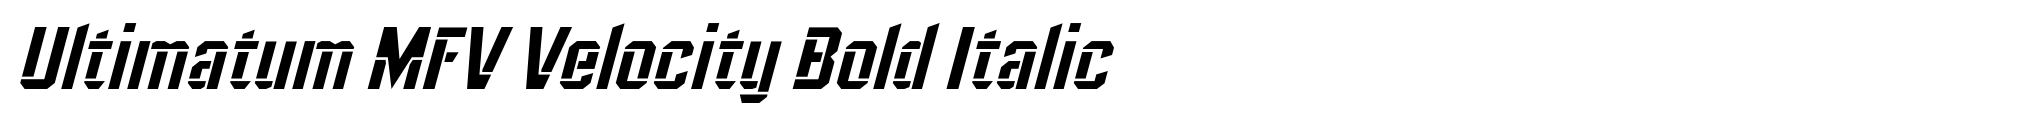 Ultimatum MFV Velocity Bold Italic image